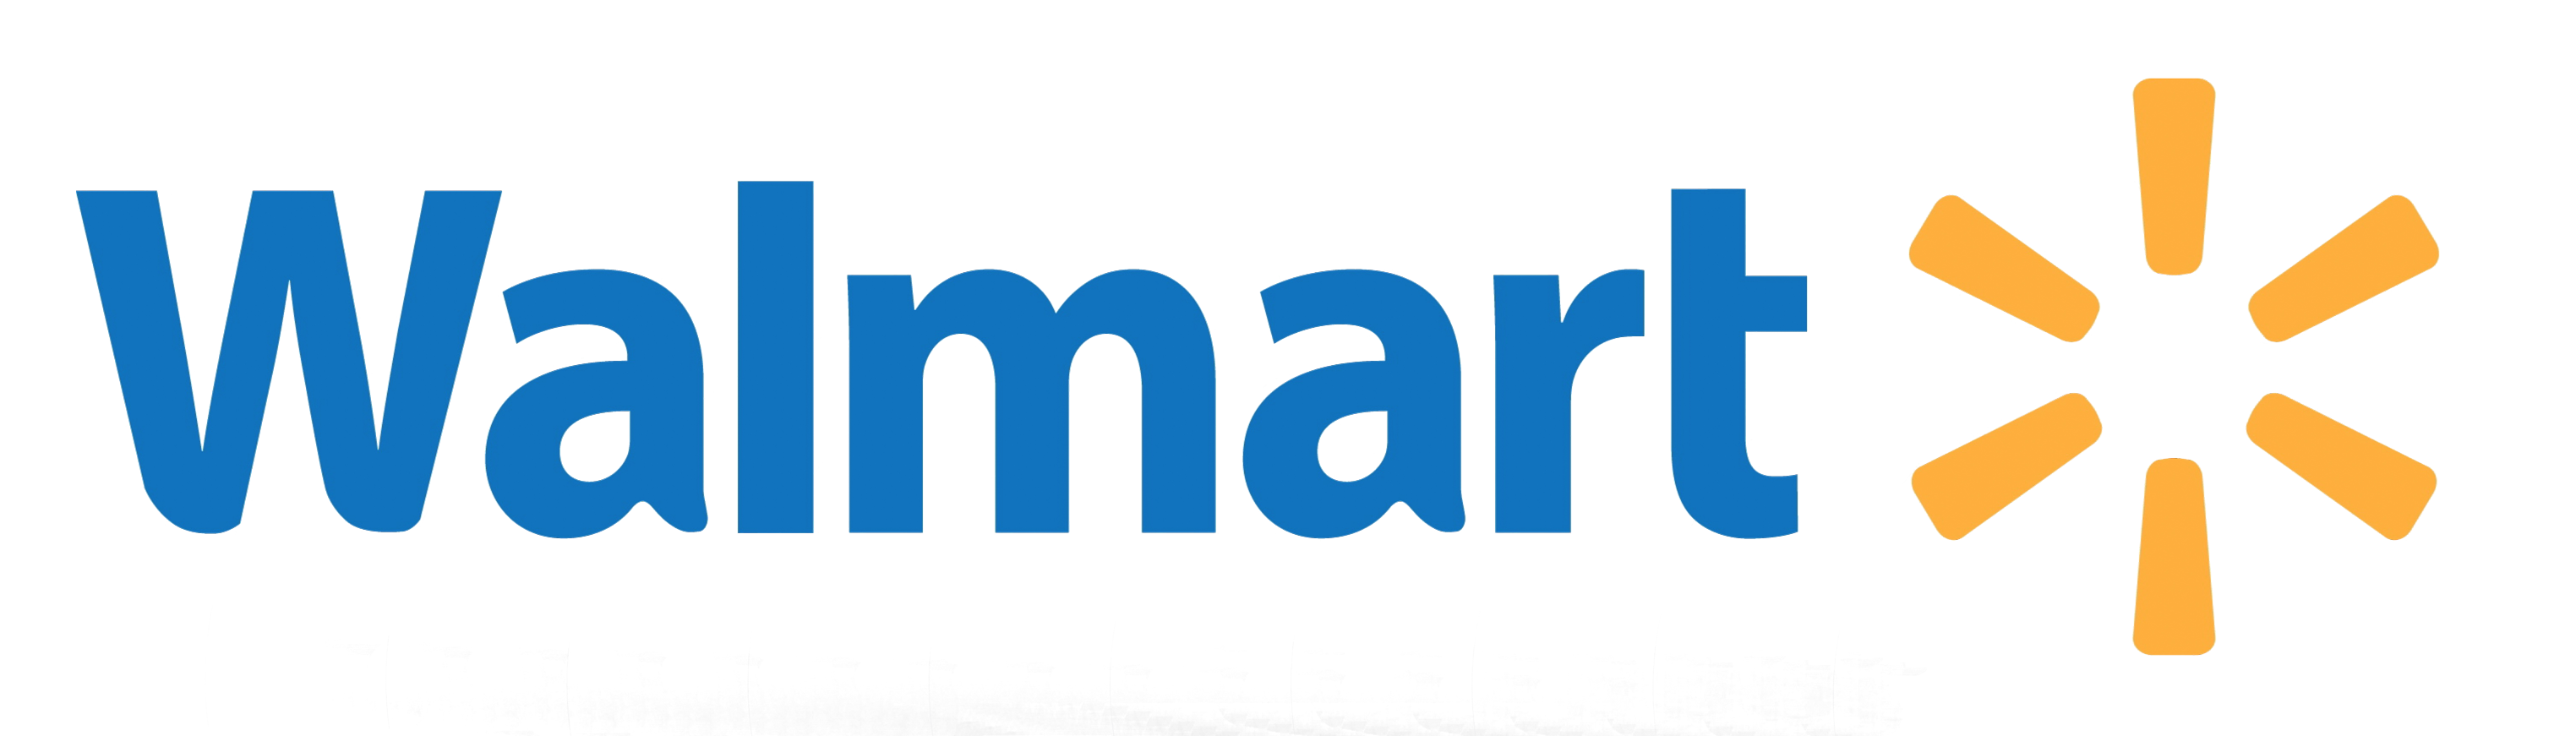 Walmart logotipo fundo transparente | PNG Play